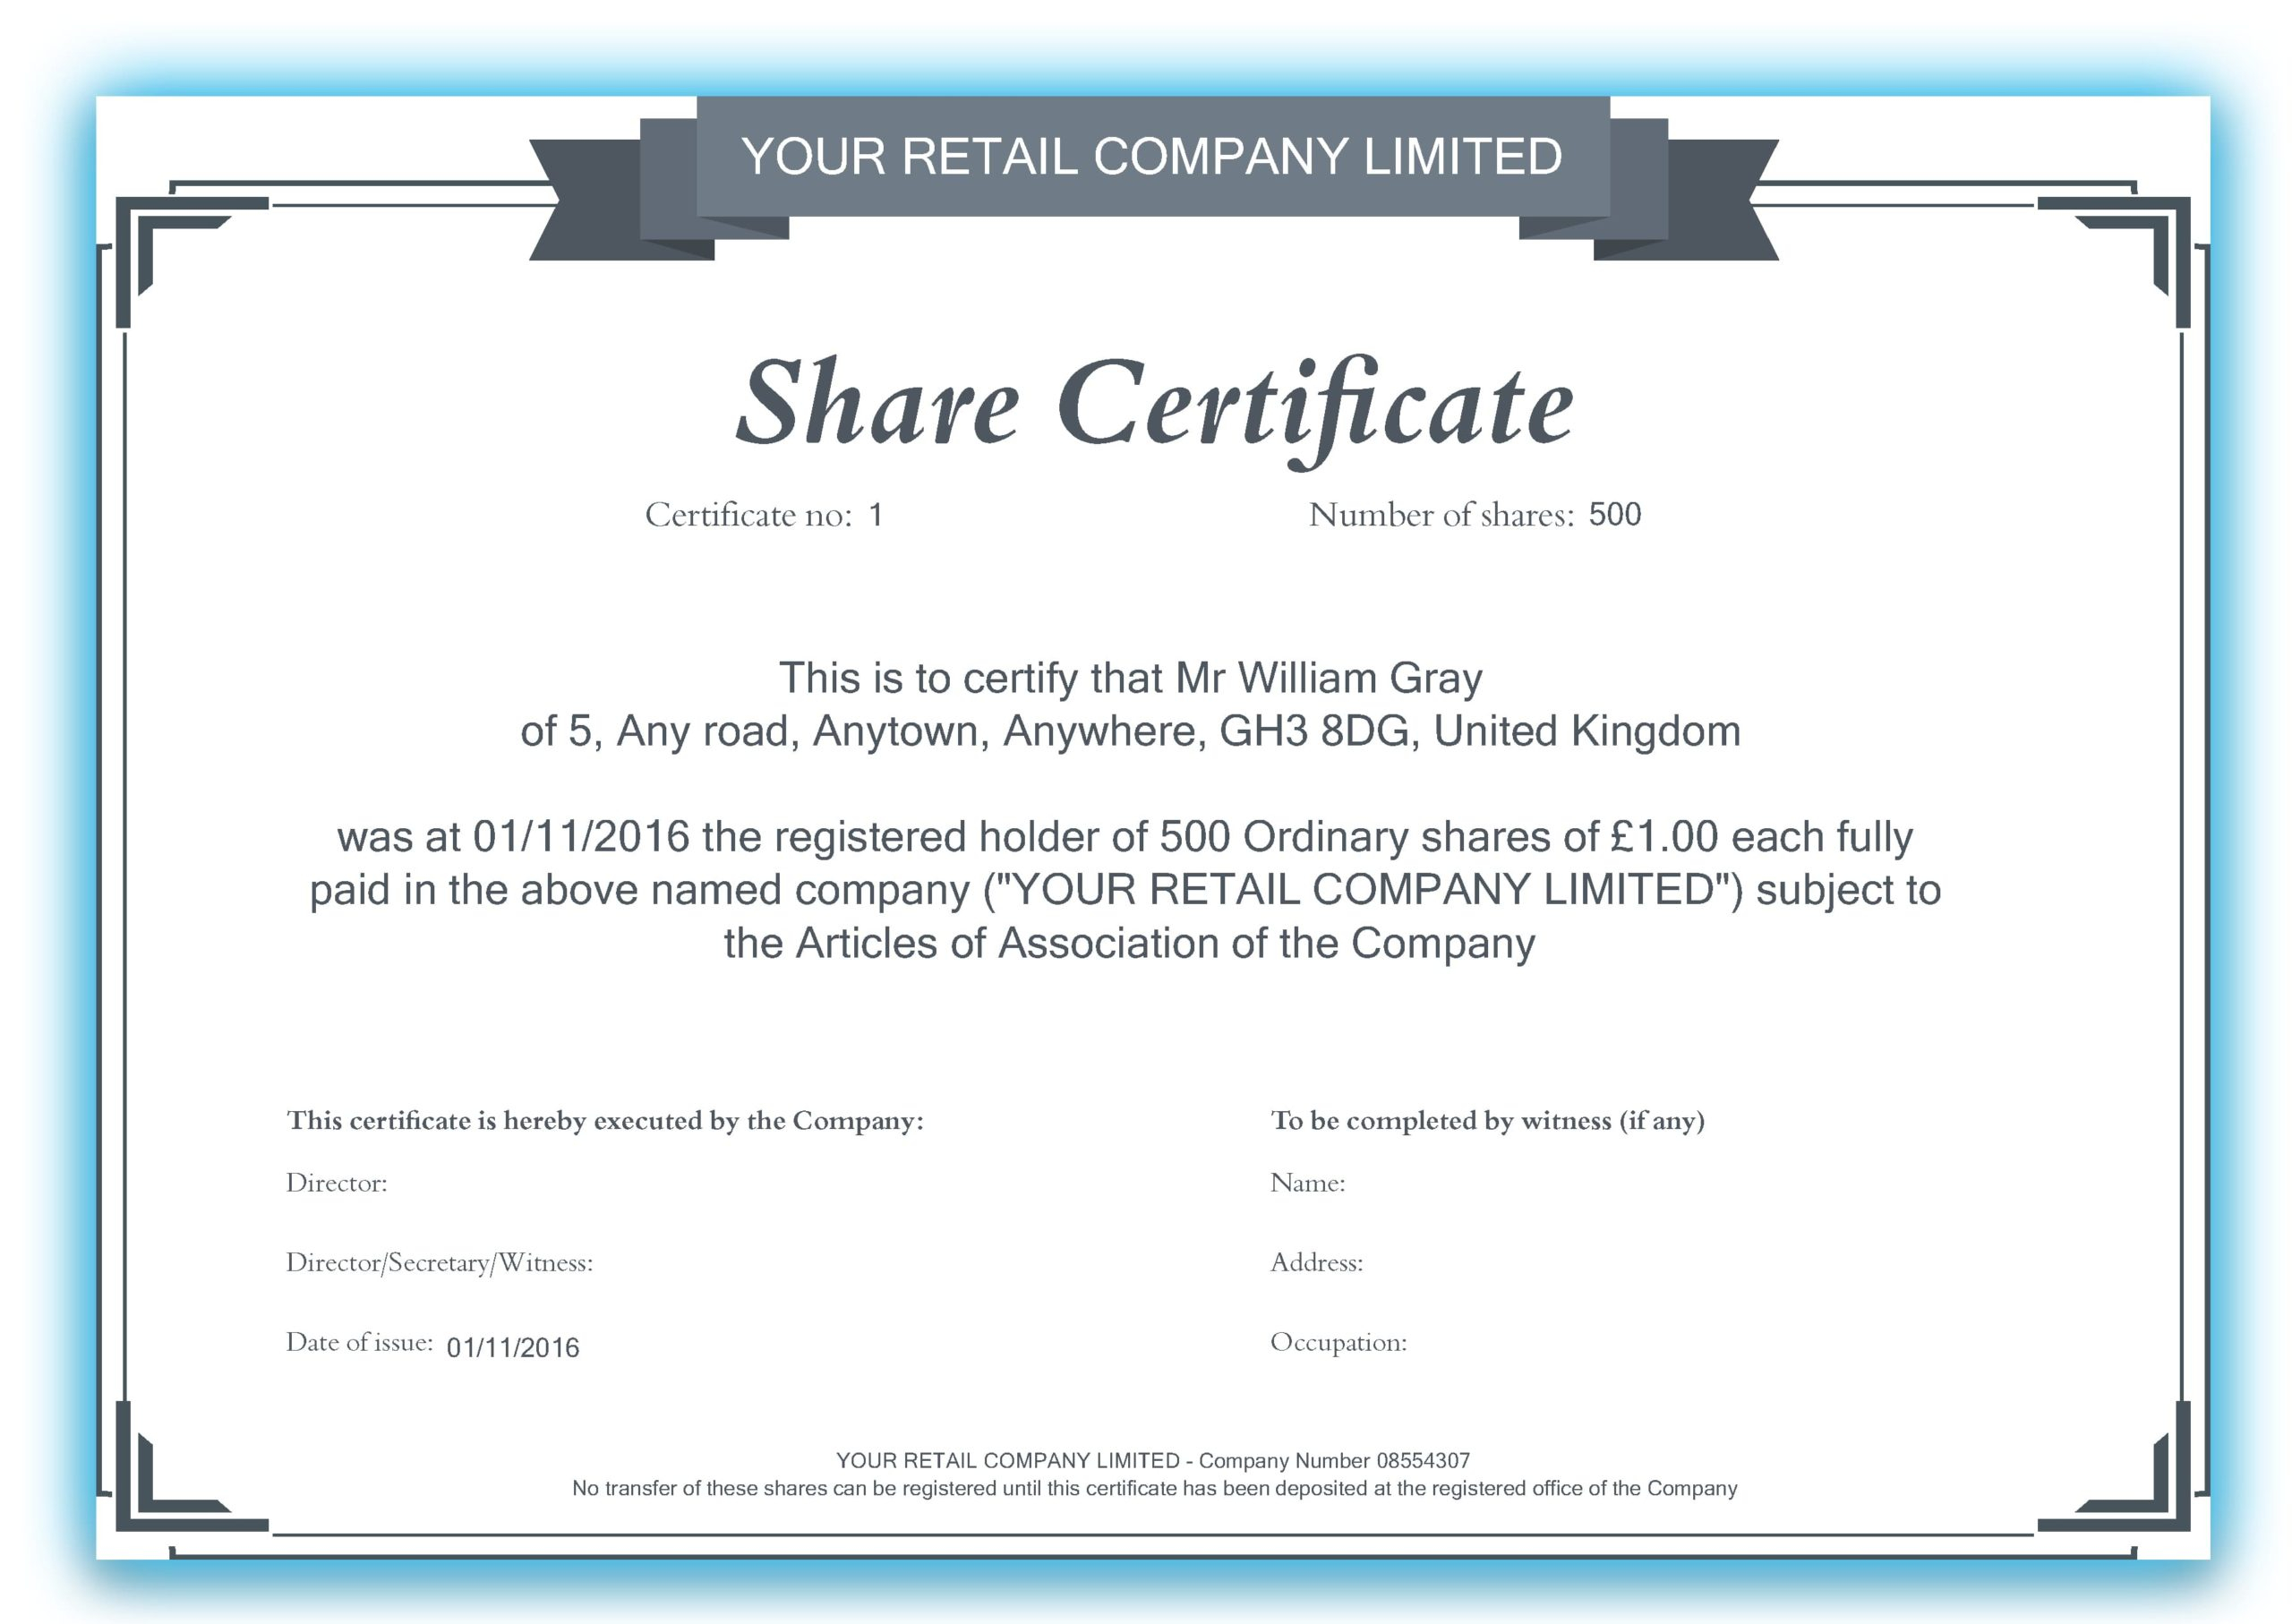 Free Share Certificate Template - Uniwide Formations Within Template For Share Certificate